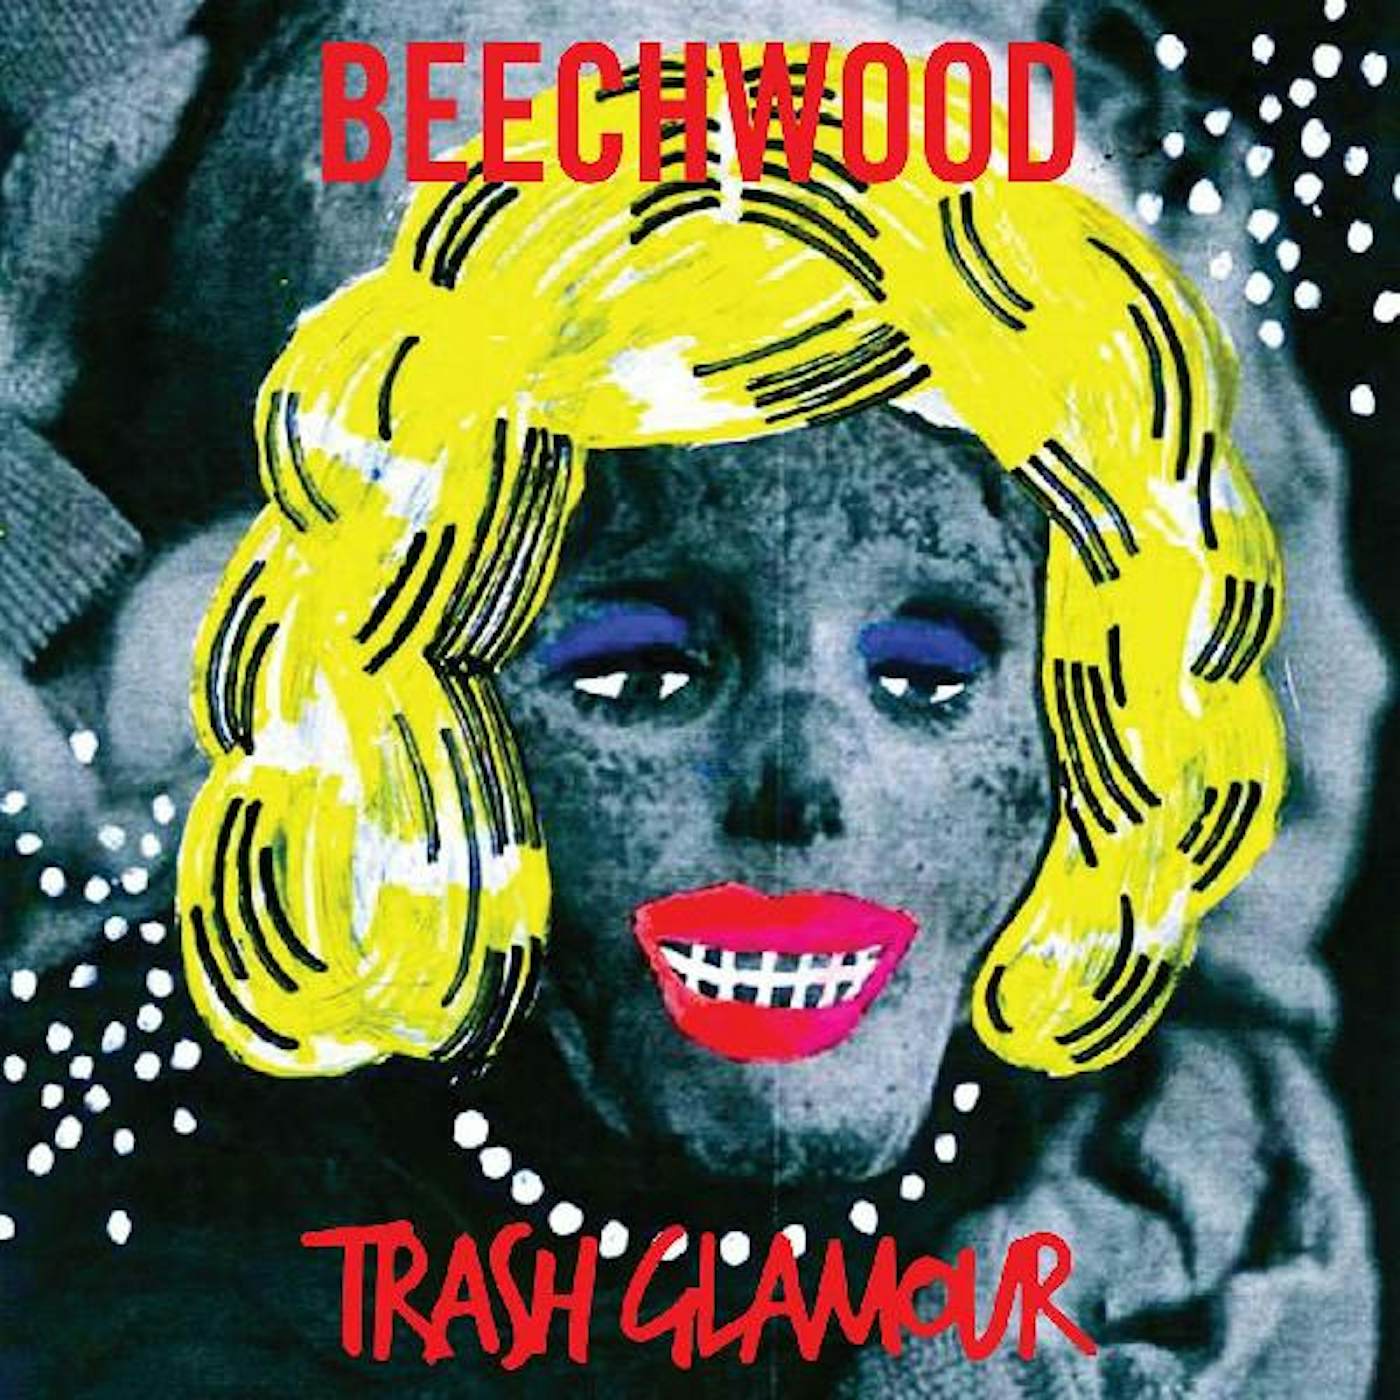 Beechwood TRASH GLAMOUR (STARBURST VINYL) Vinyl Record